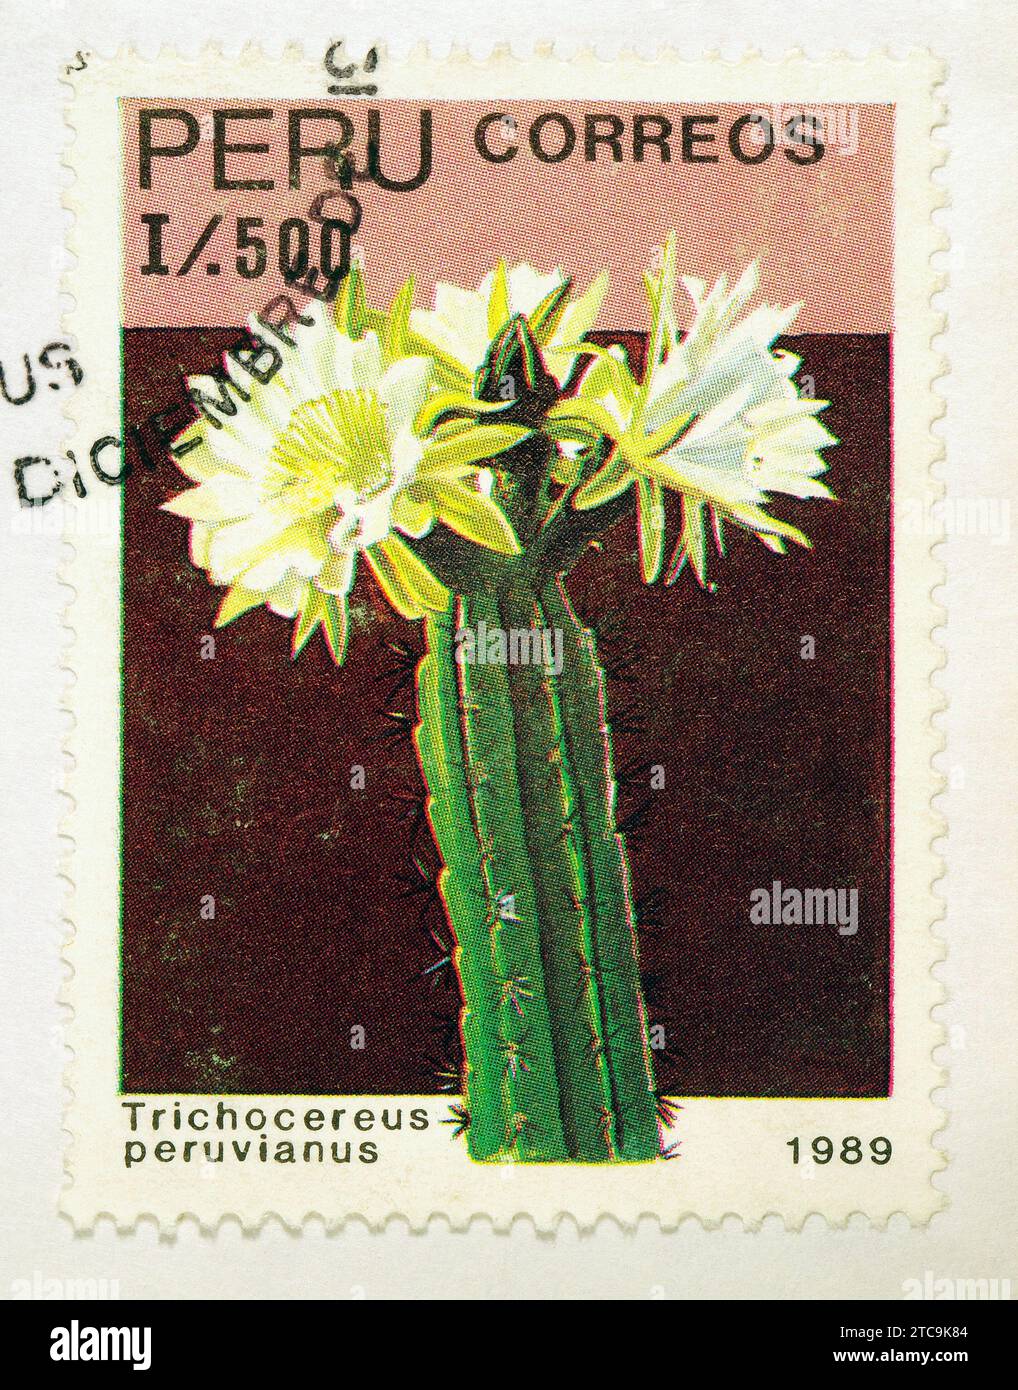 Trichocereus peruvianus - Peru [1989] - BRIEFMARKE Stockfoto